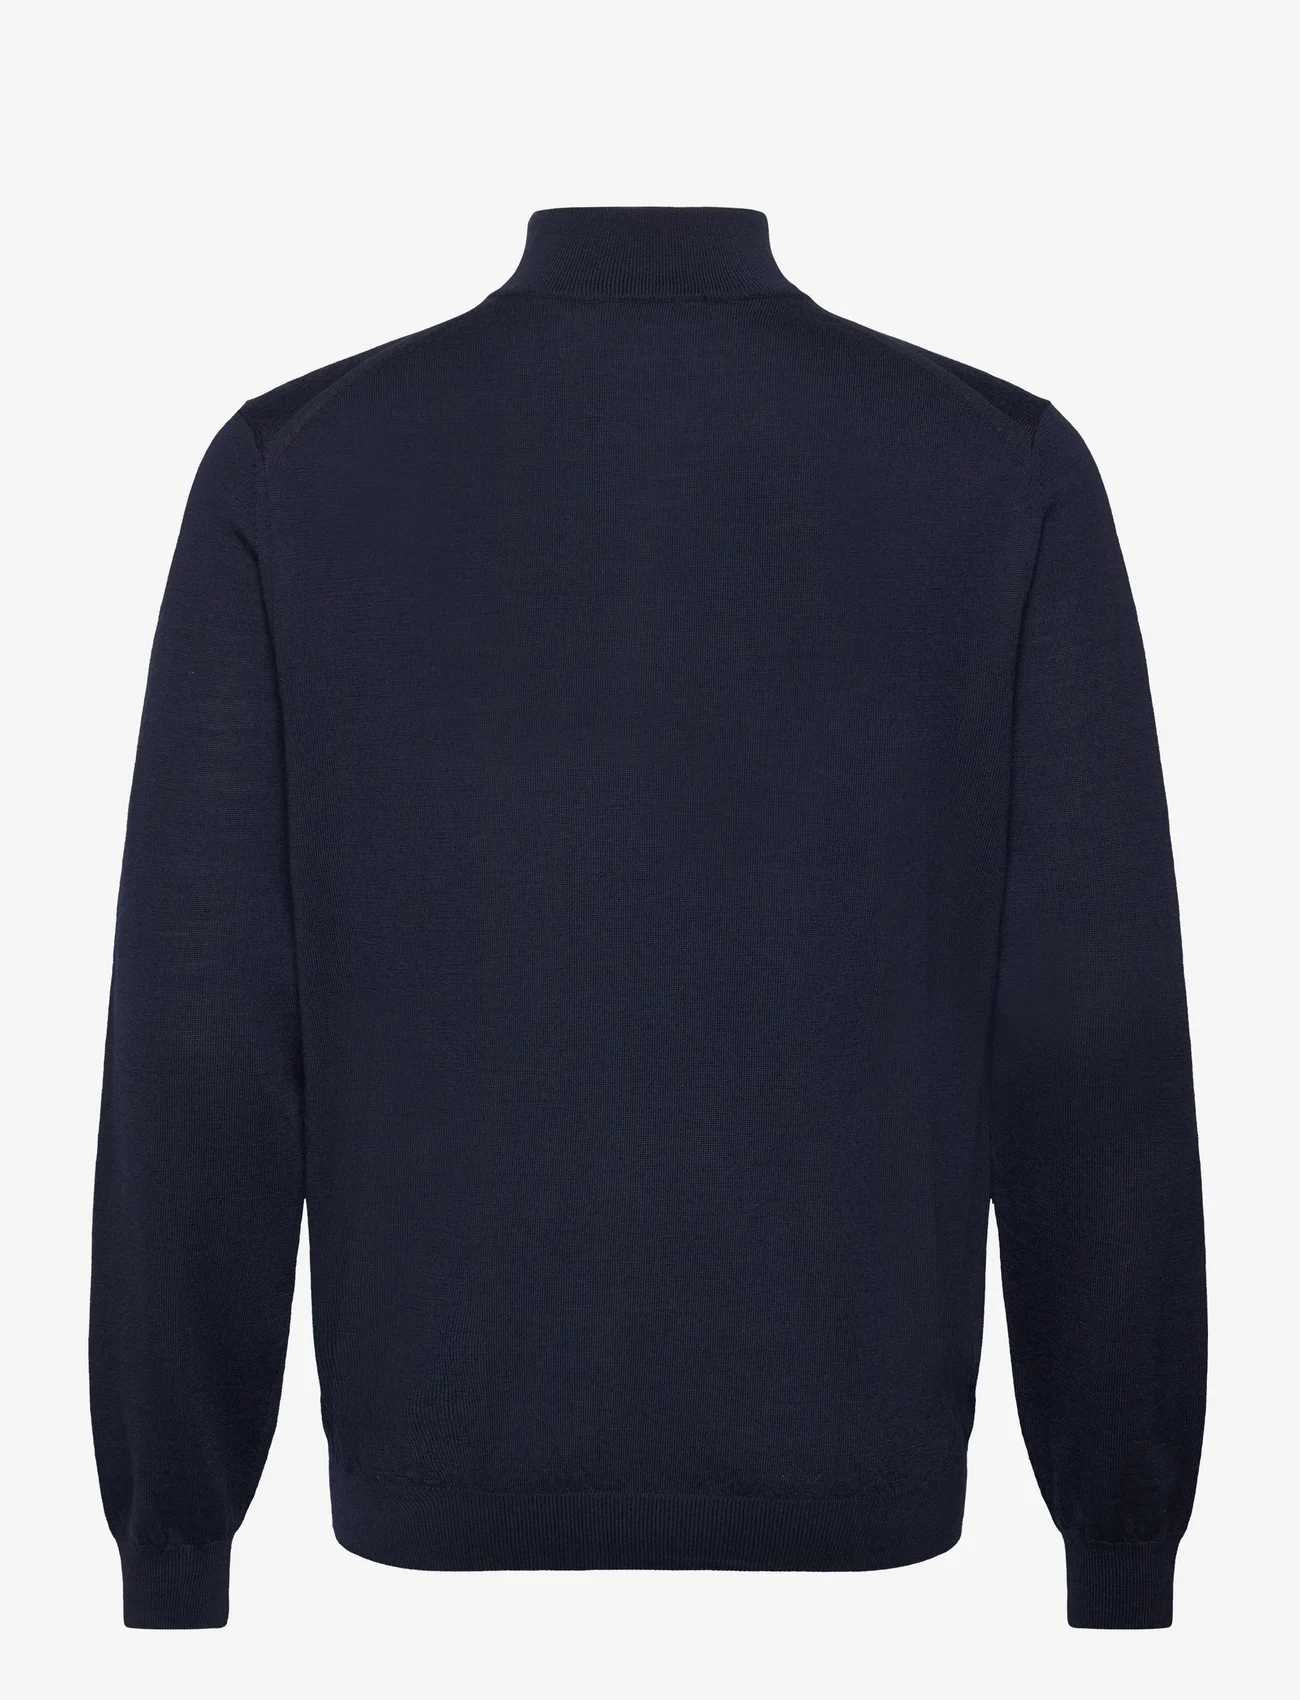 Mango - 100% merino wool sweater with zip collar - menn - navy - 1